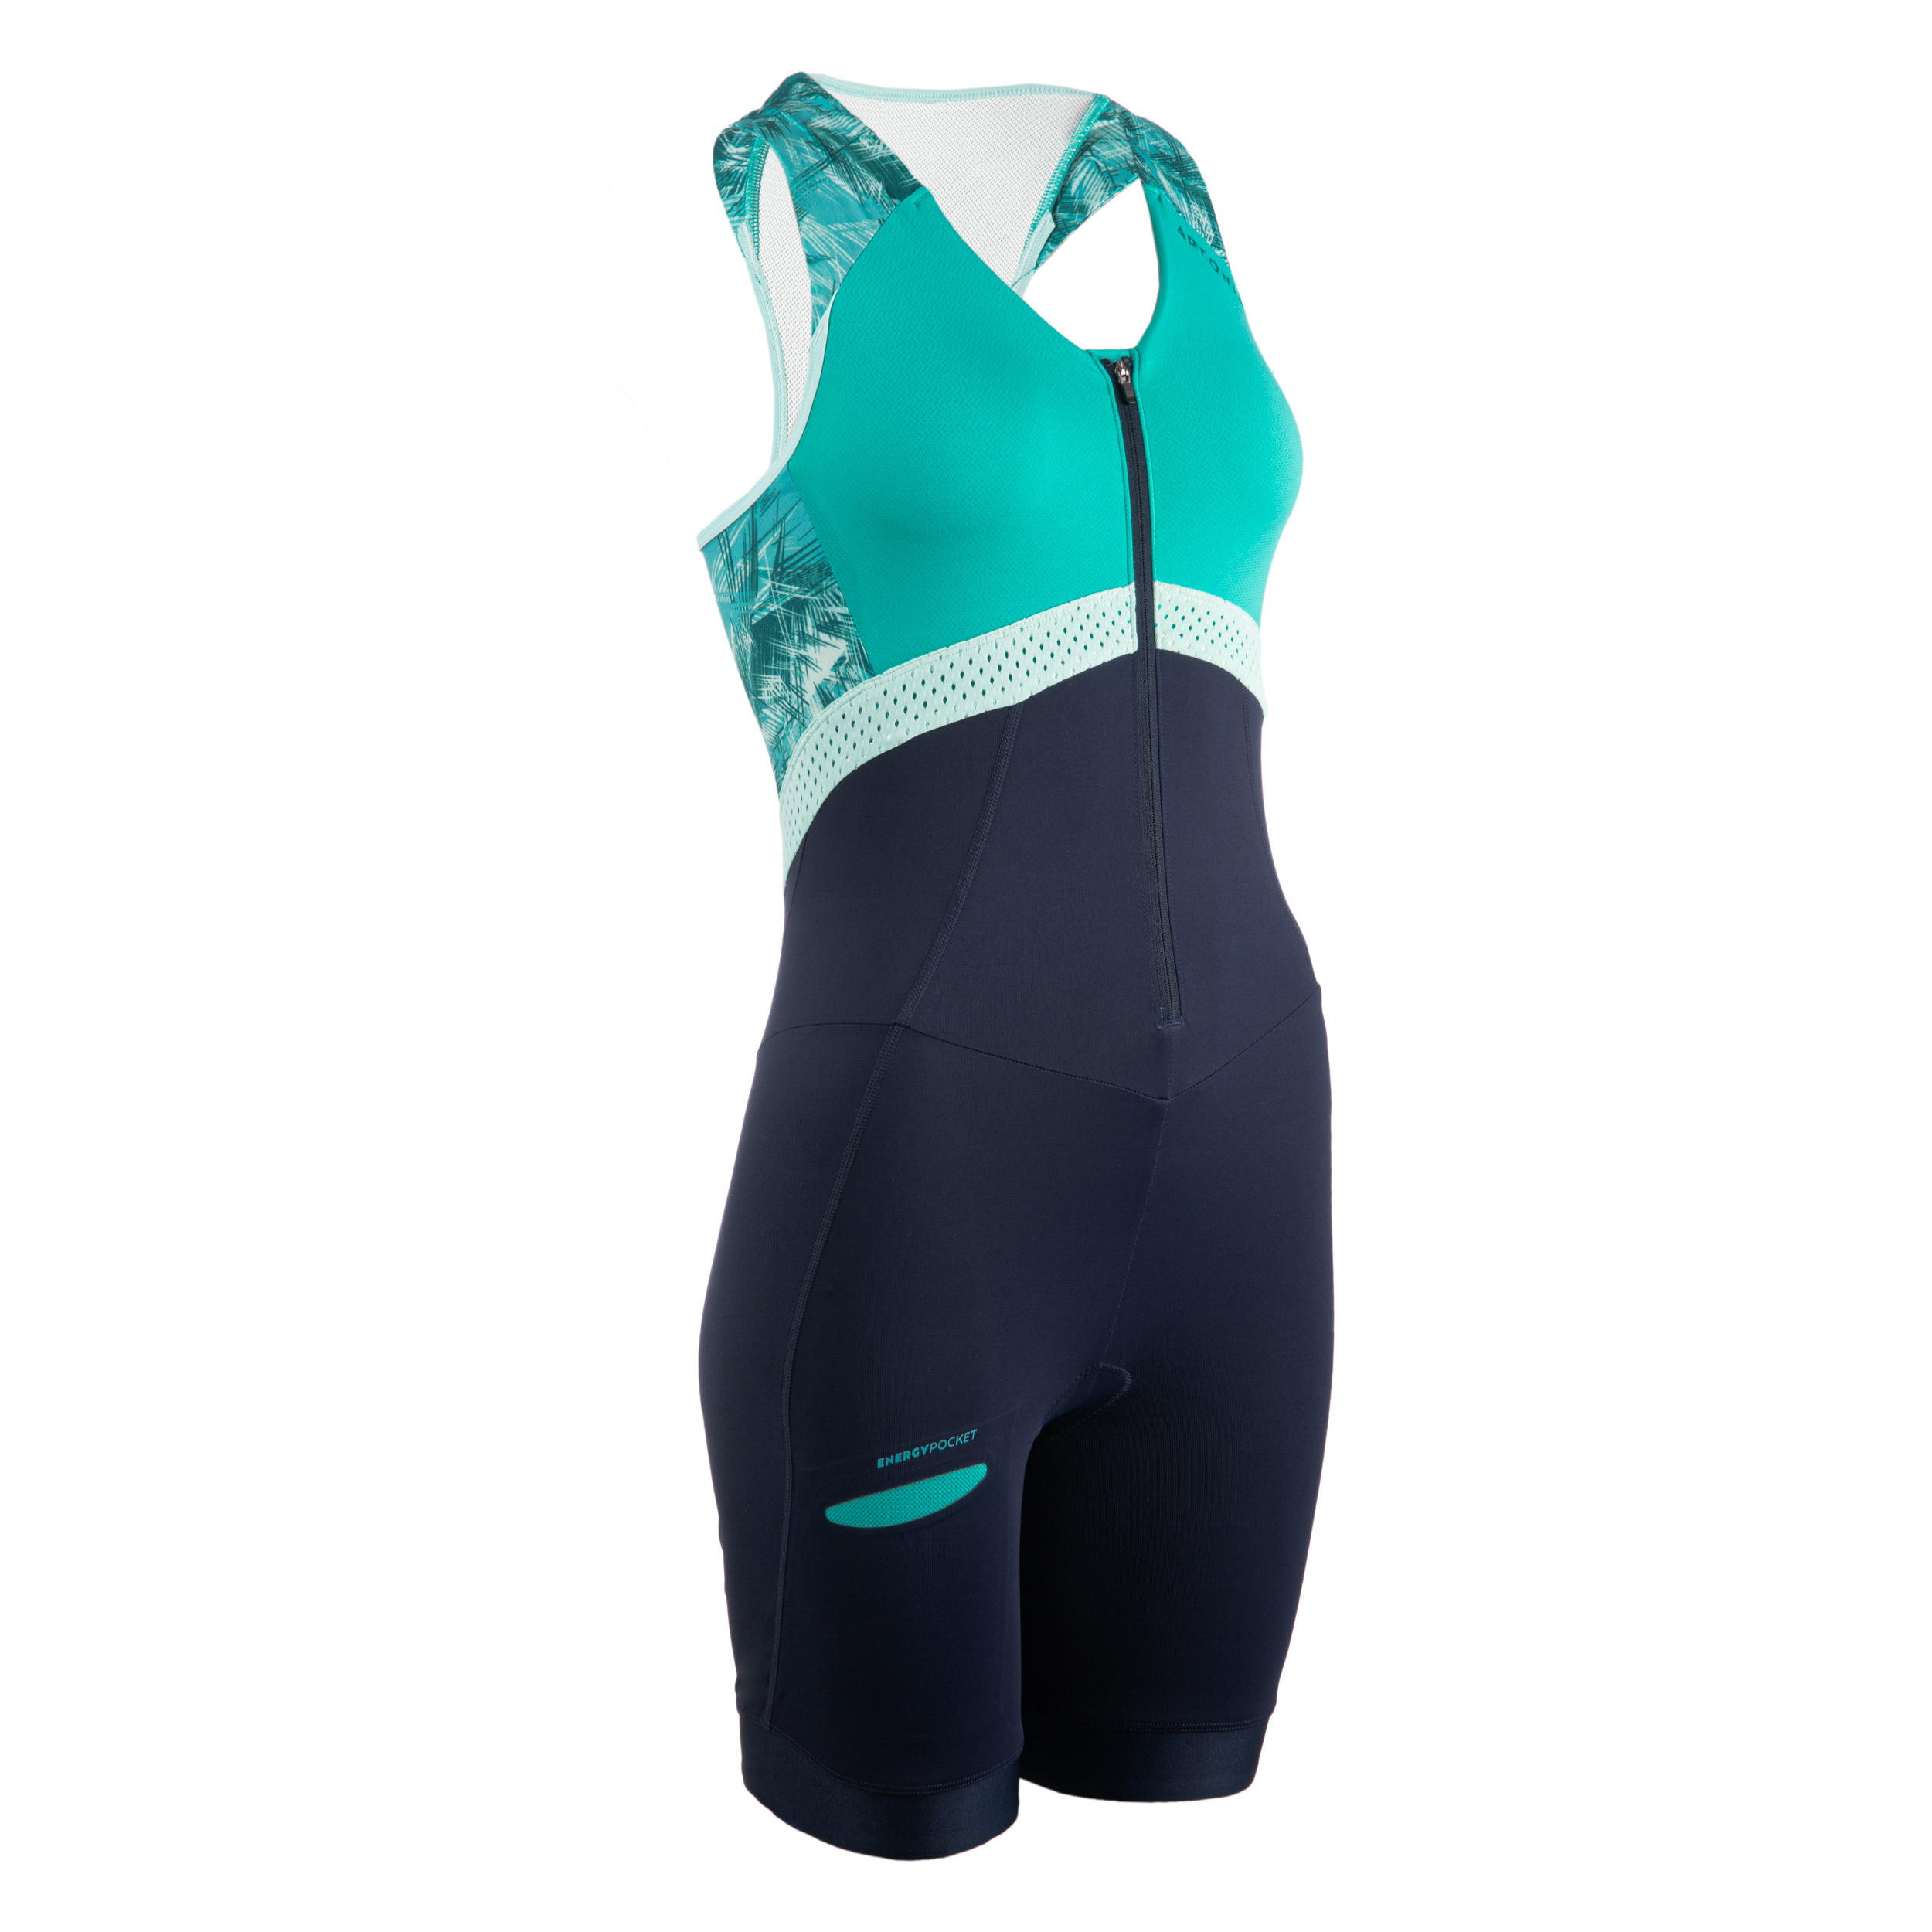 VAN RYSEL SD Women's Short-Distance Trisuit - Black/Green